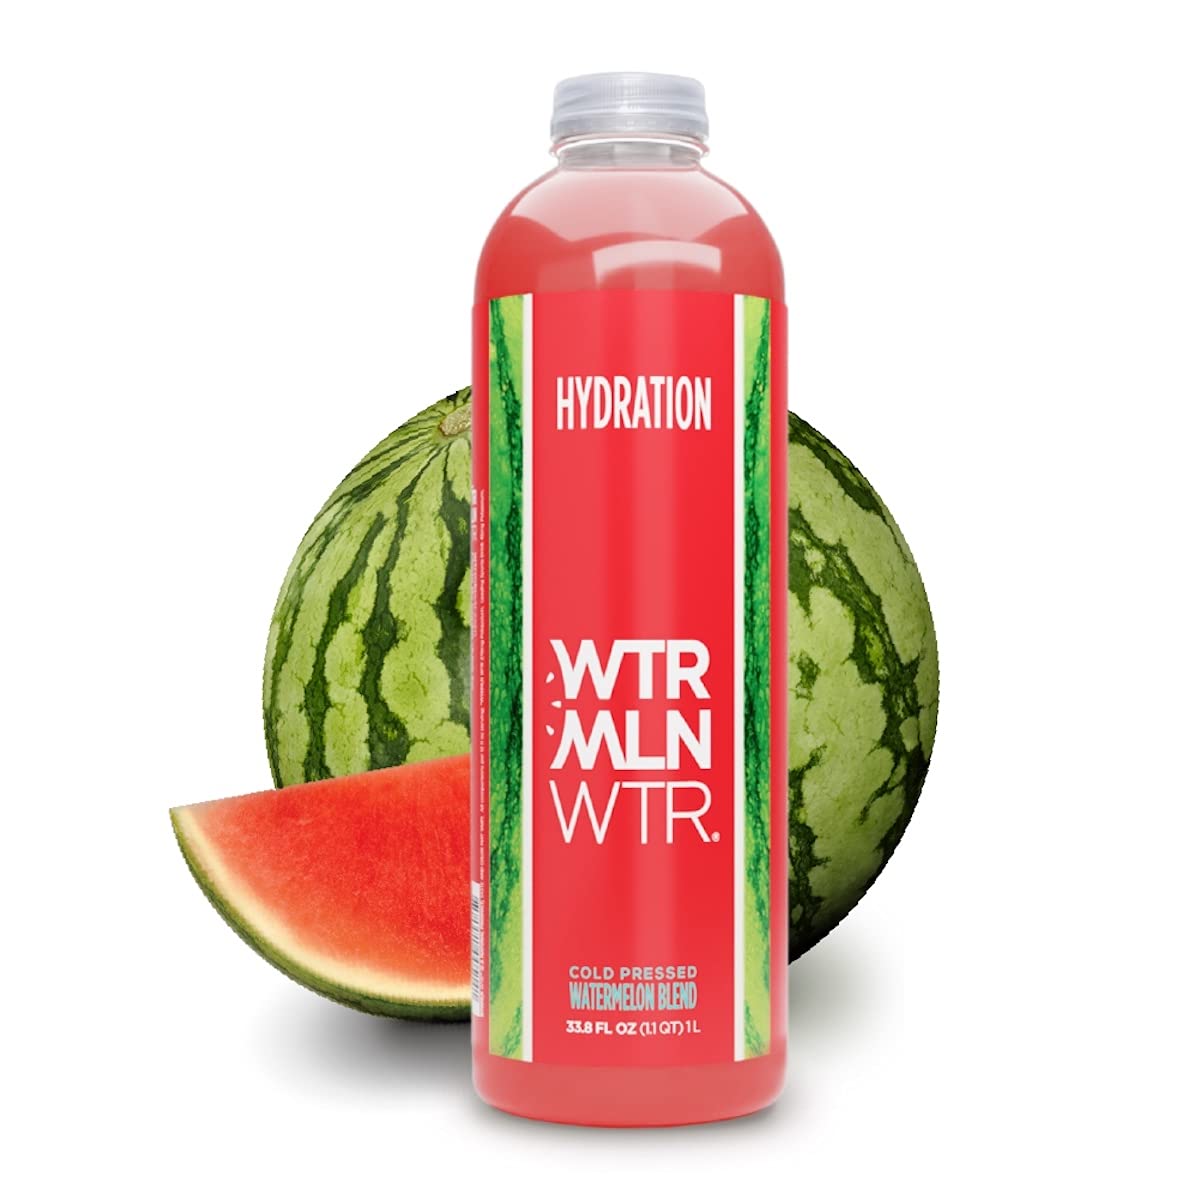 WTRMLN WTR Original Cold Pressed Juiced Watermelon, 33.8 fl oz - image 5 of 7